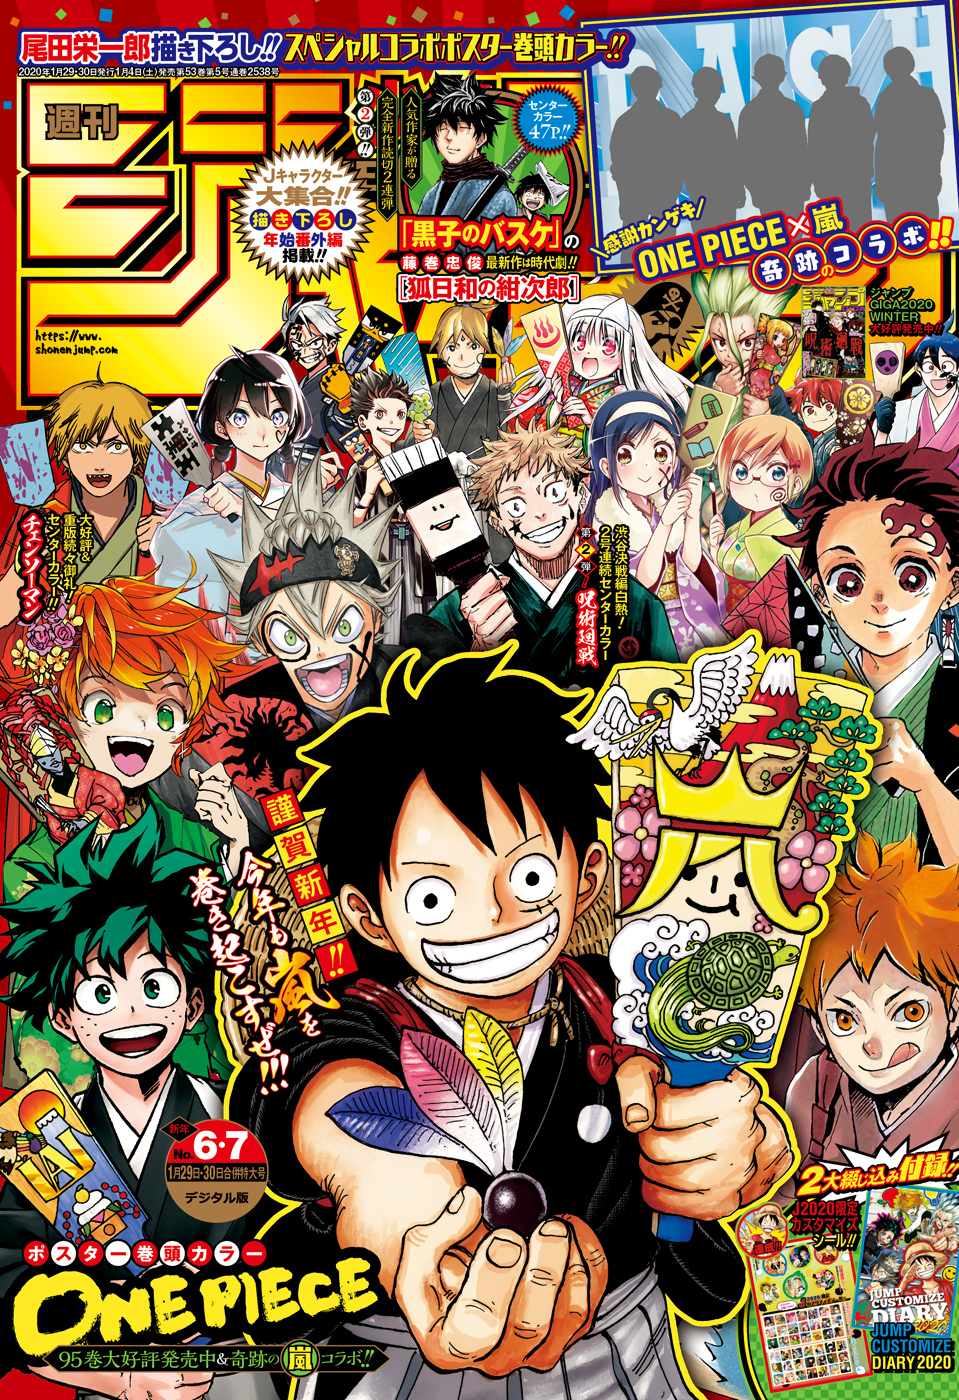 Weekly Shonen Jump Issue 6 7 Jump Database Fandom